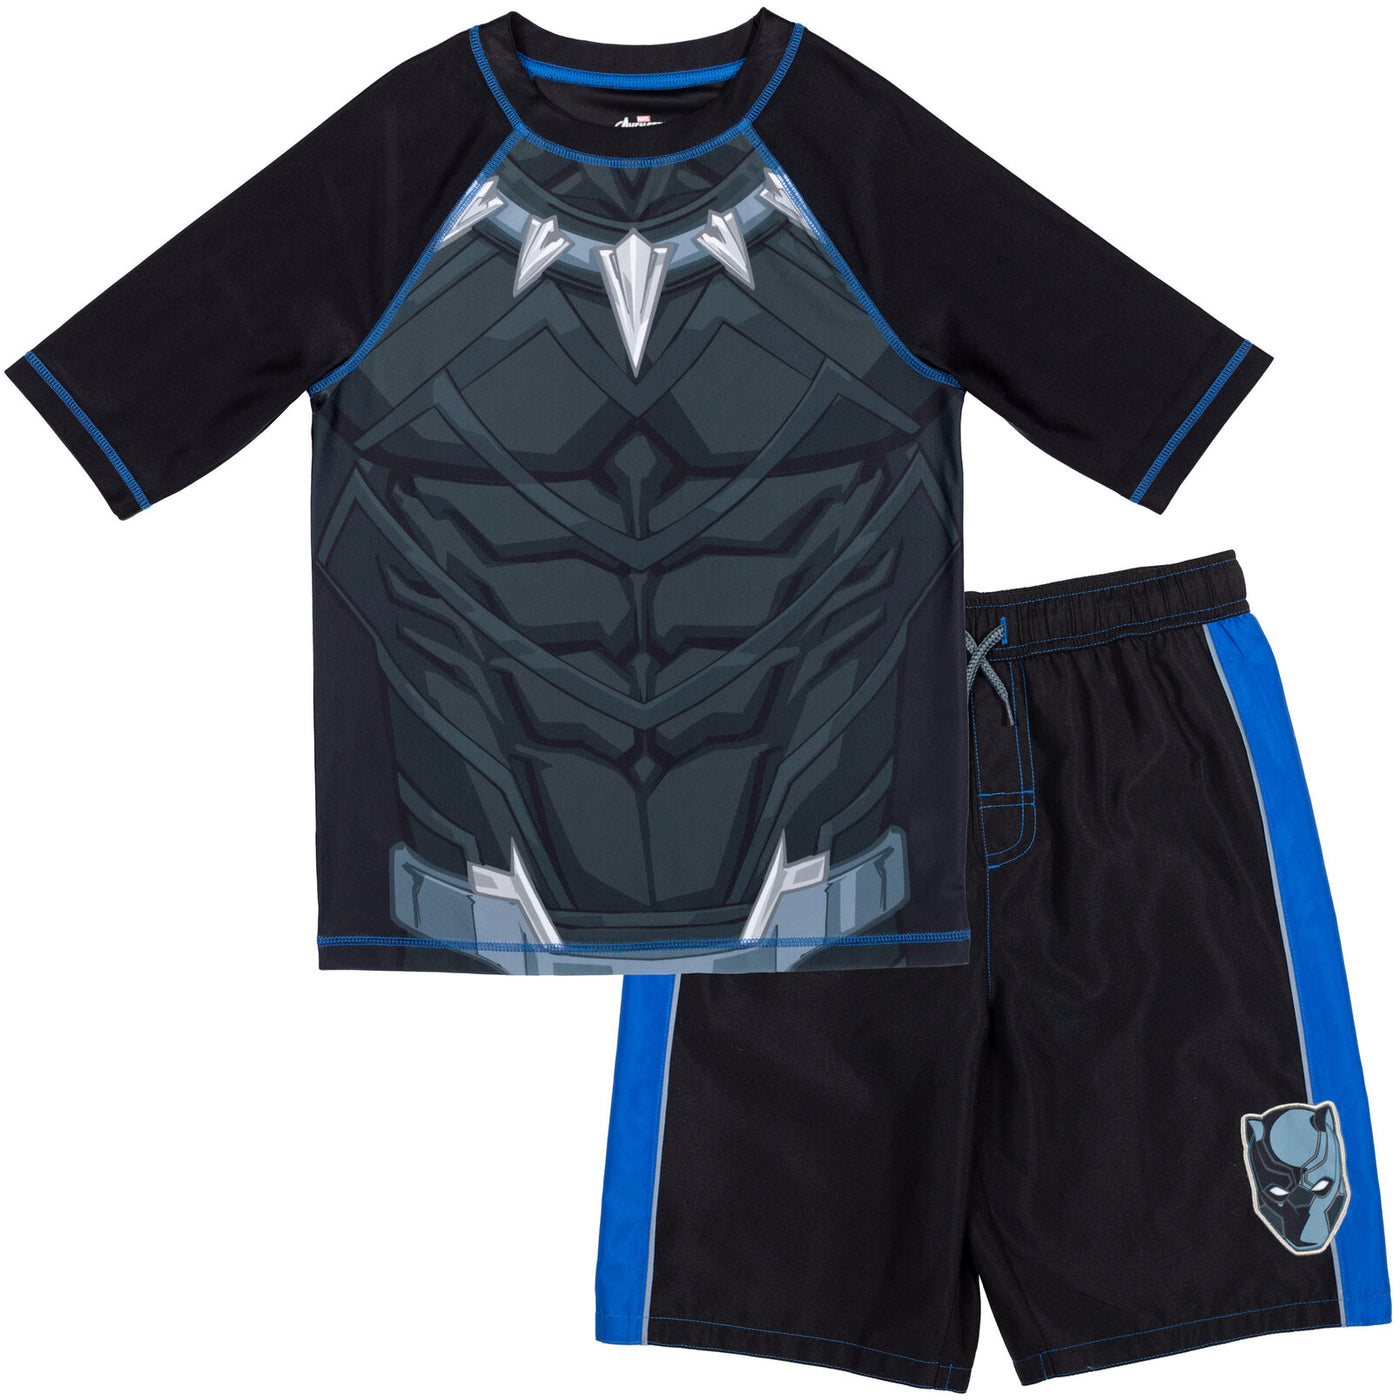 Marvel Avengers Black Panther UPF 50+ Rash Guard Swim Trunks Outfit Set